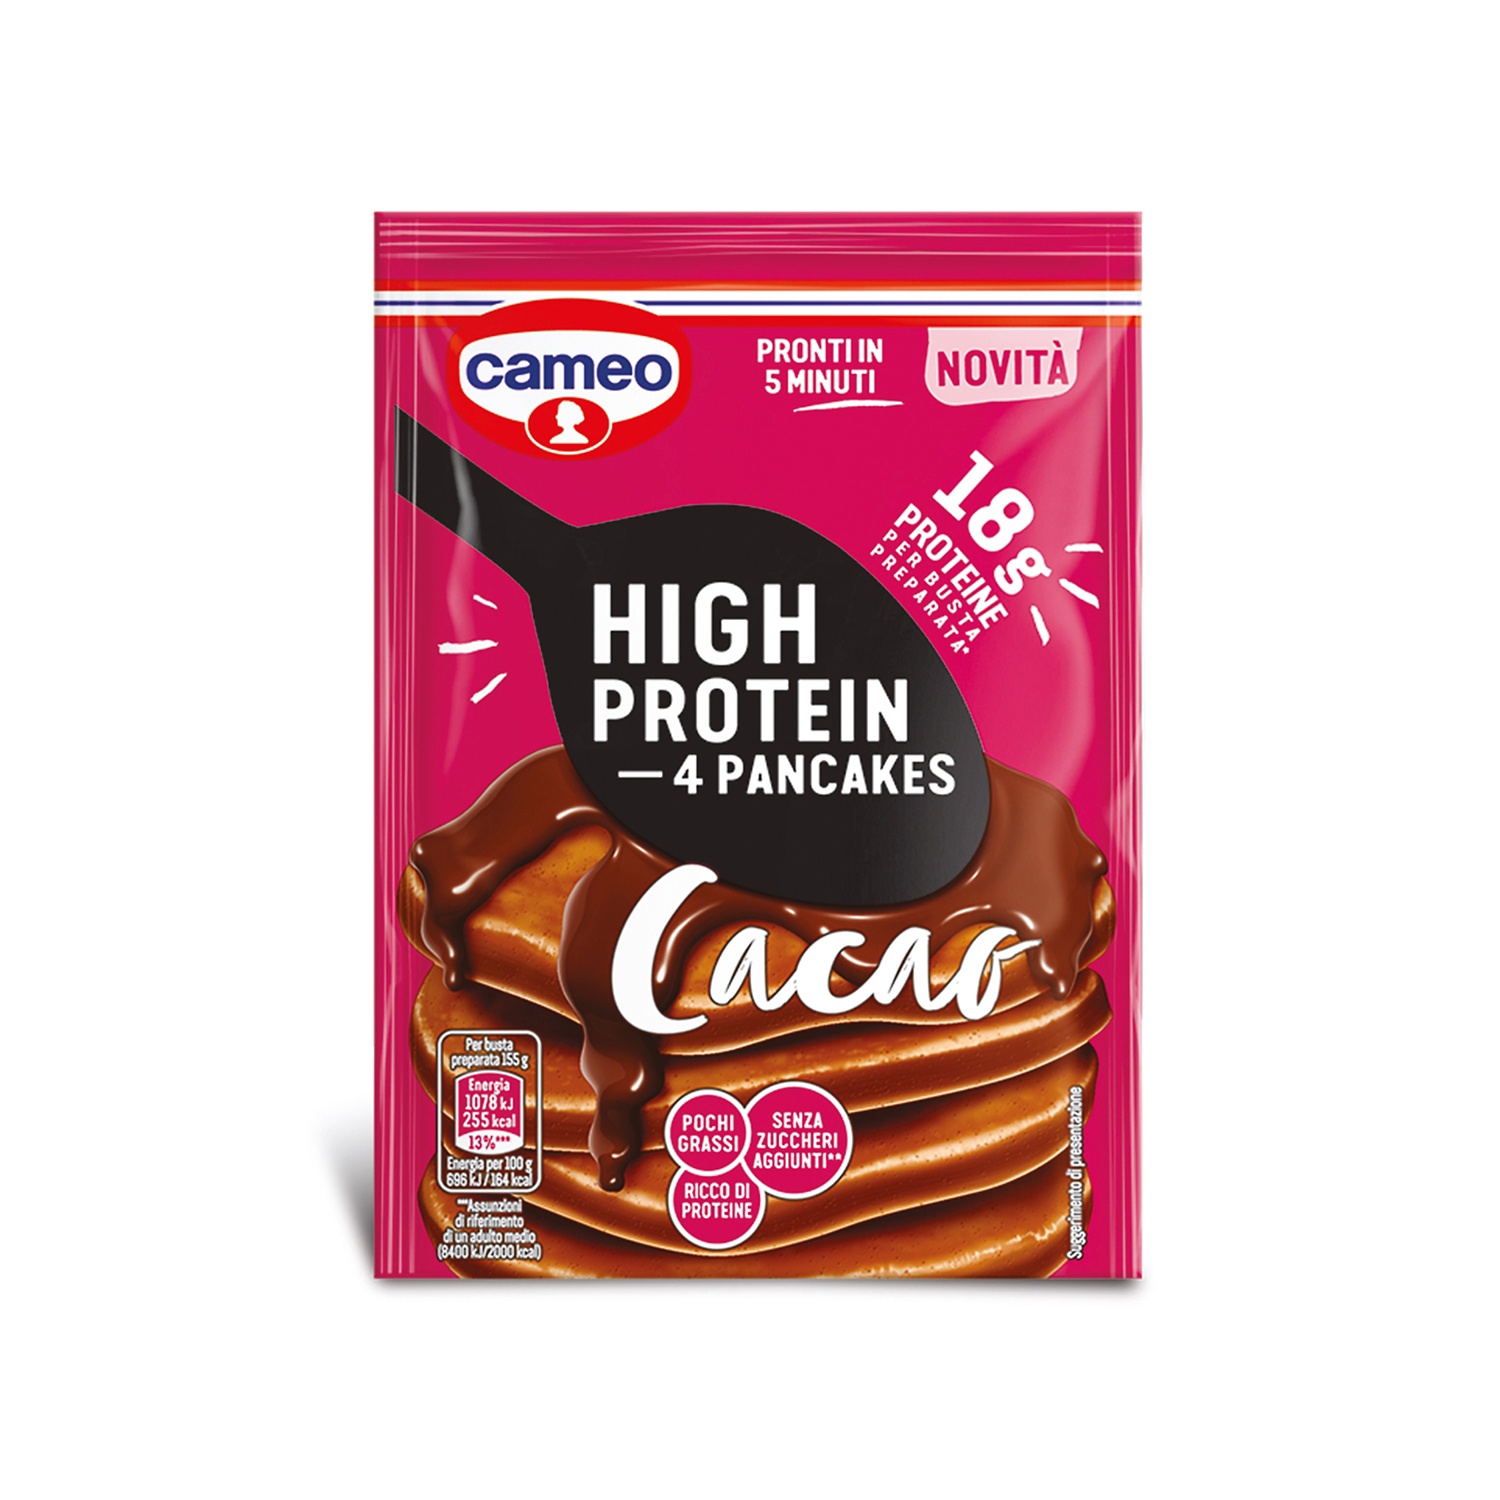 CAMEO High protein 4 pancakes